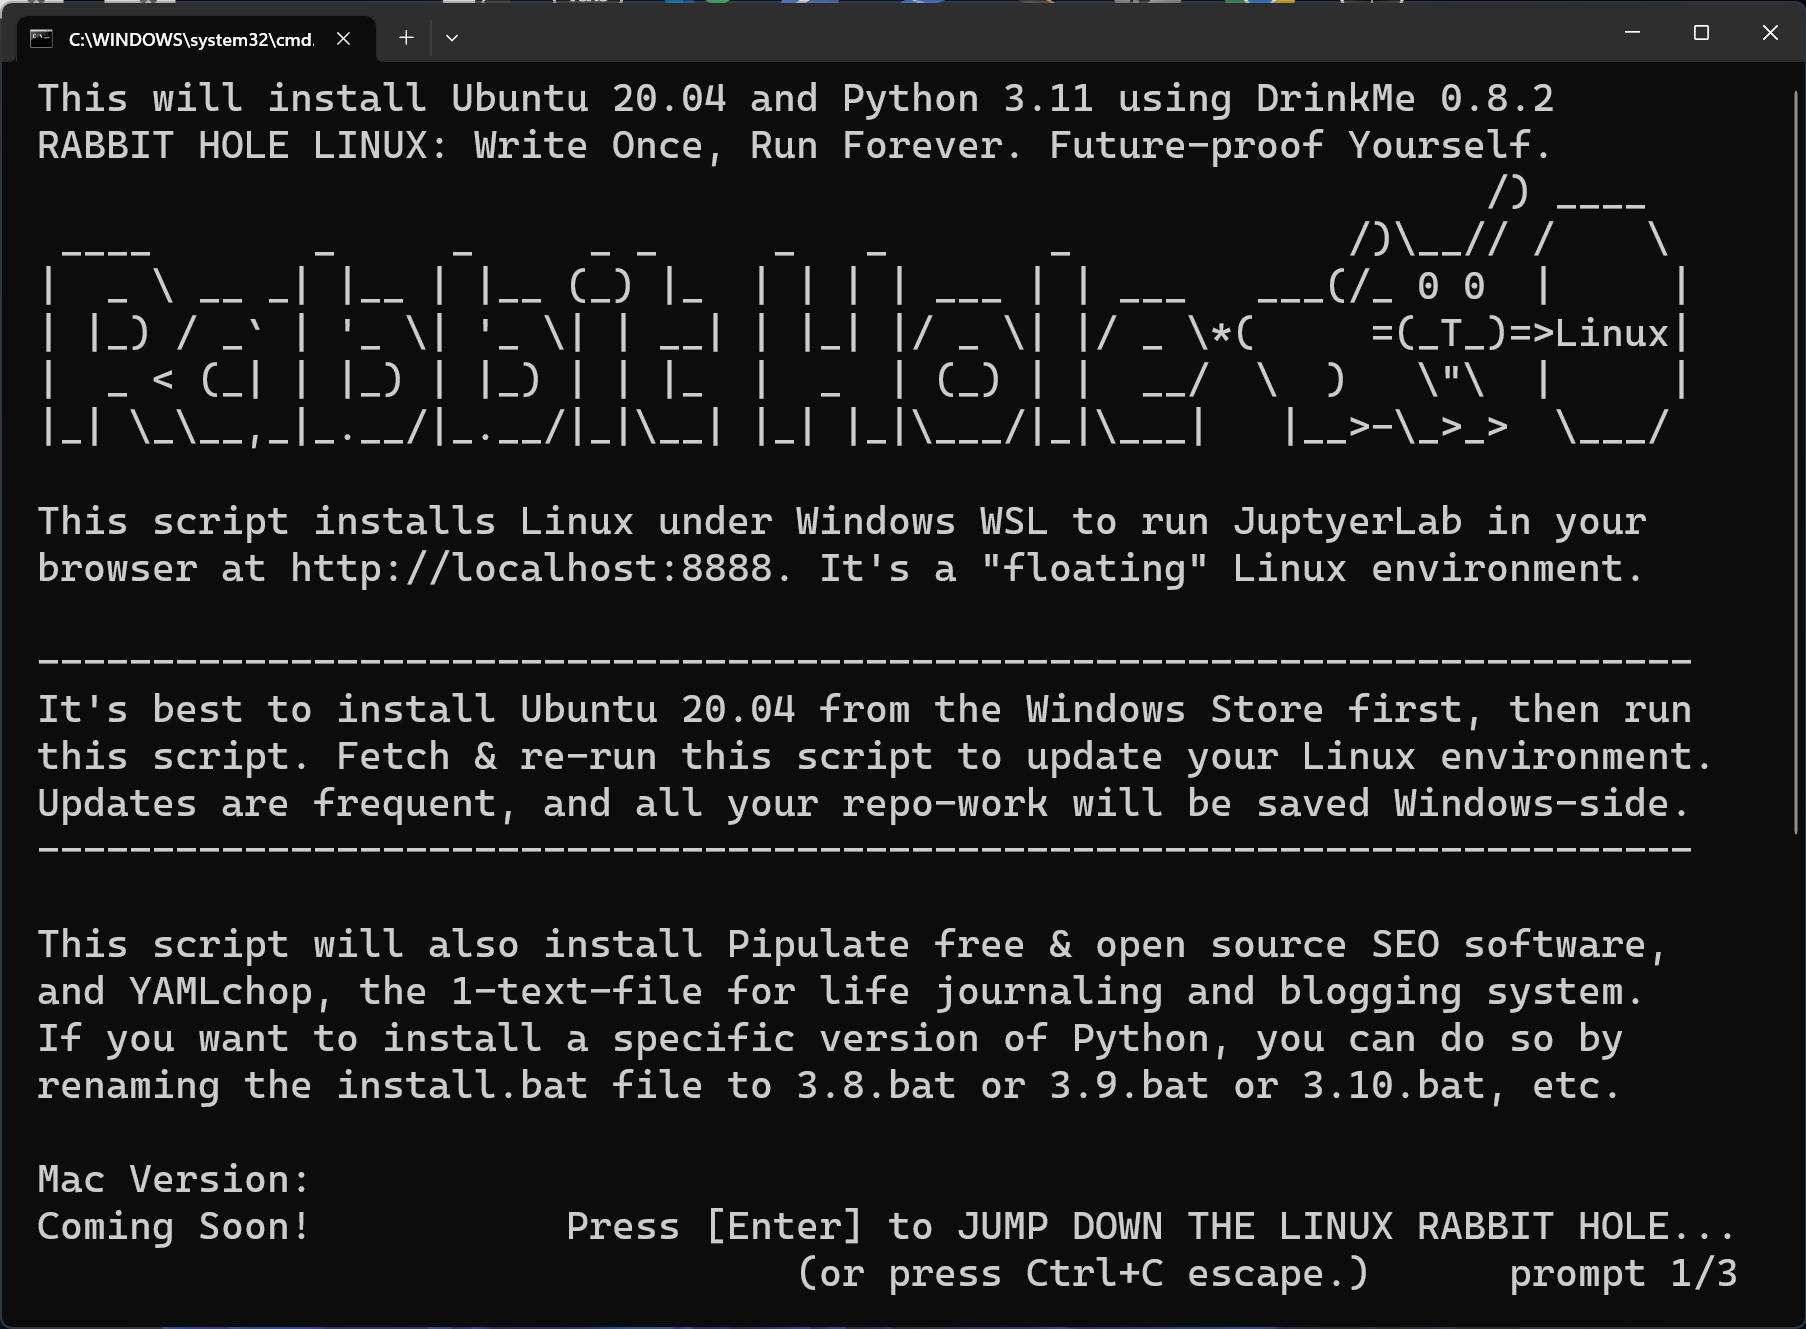 Rabbit Hole Linux Screen 1